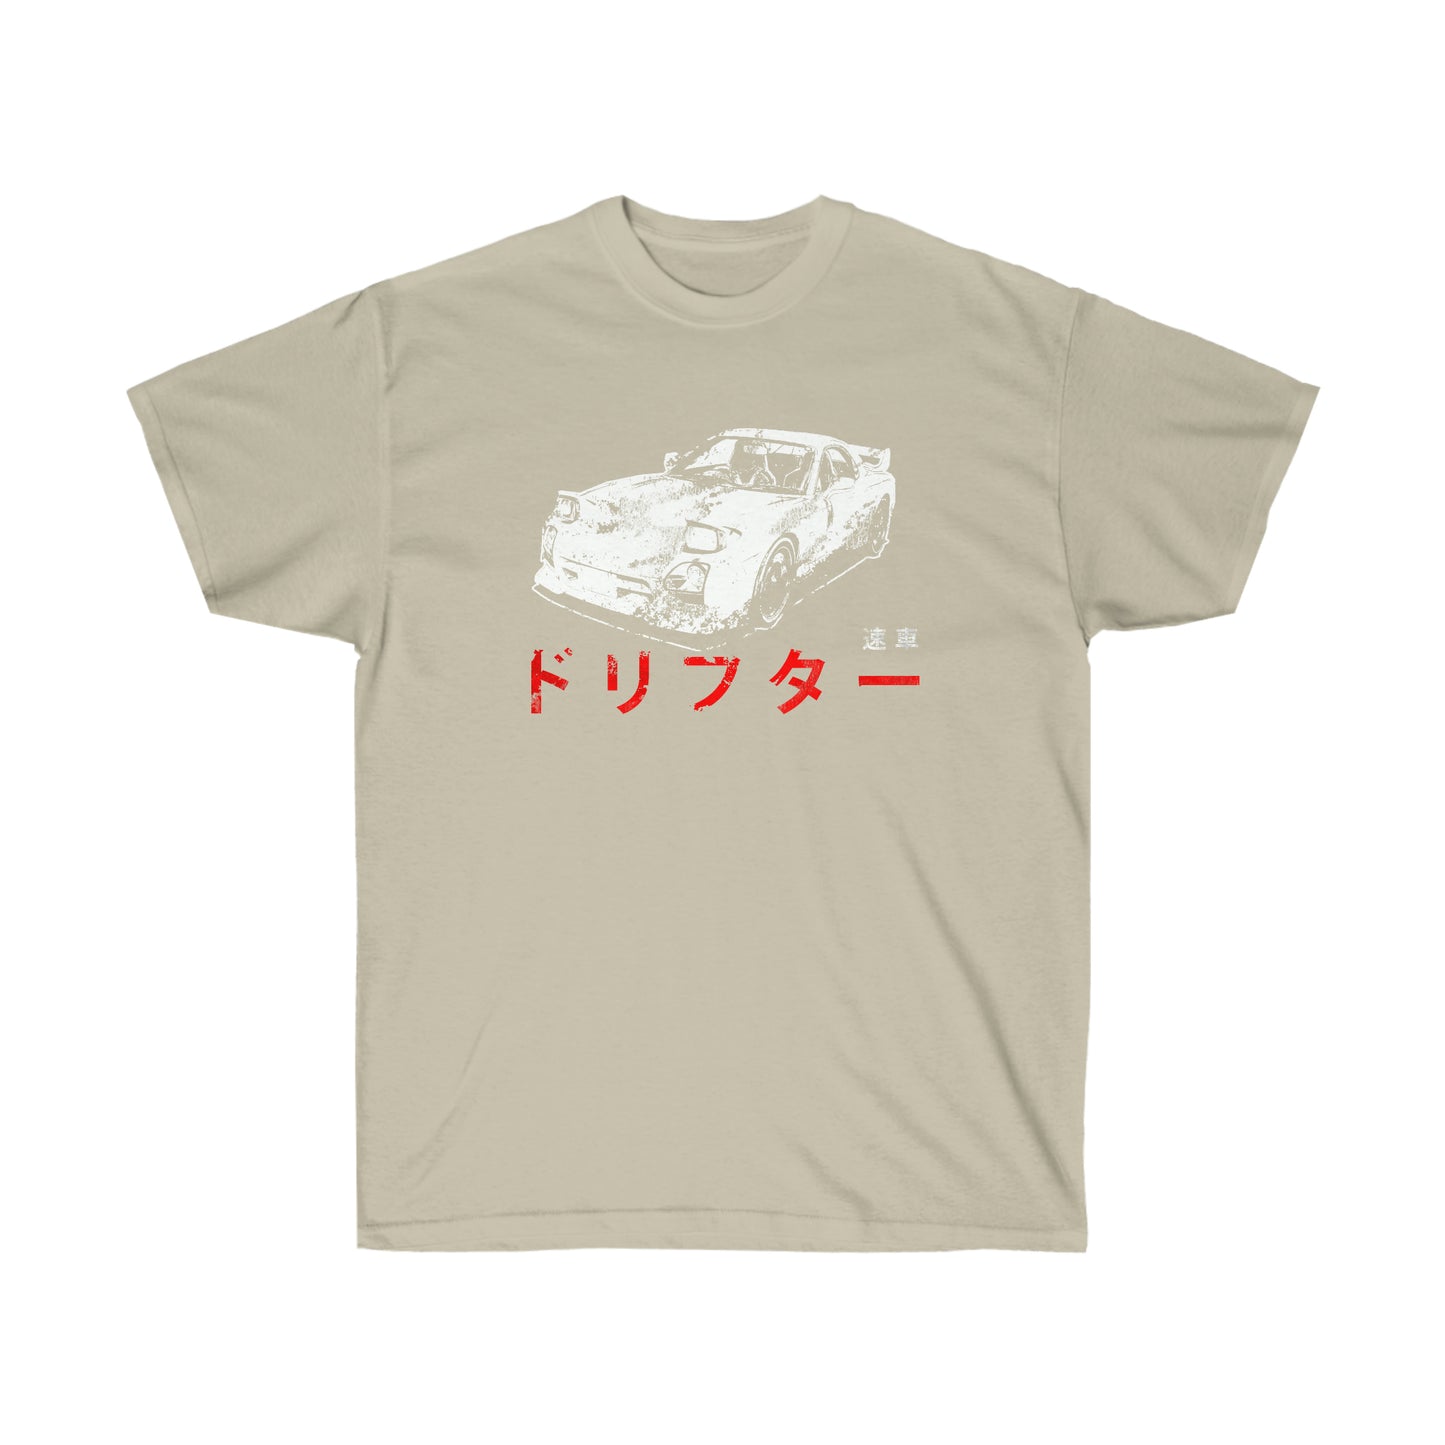 Japanese Street Racing Shirt T-Shirt Tee Aesthetic Shirt Aesthetic,Aesthetic Clothing, Japanese Shirt, Japanese Car, Car Racing JDM